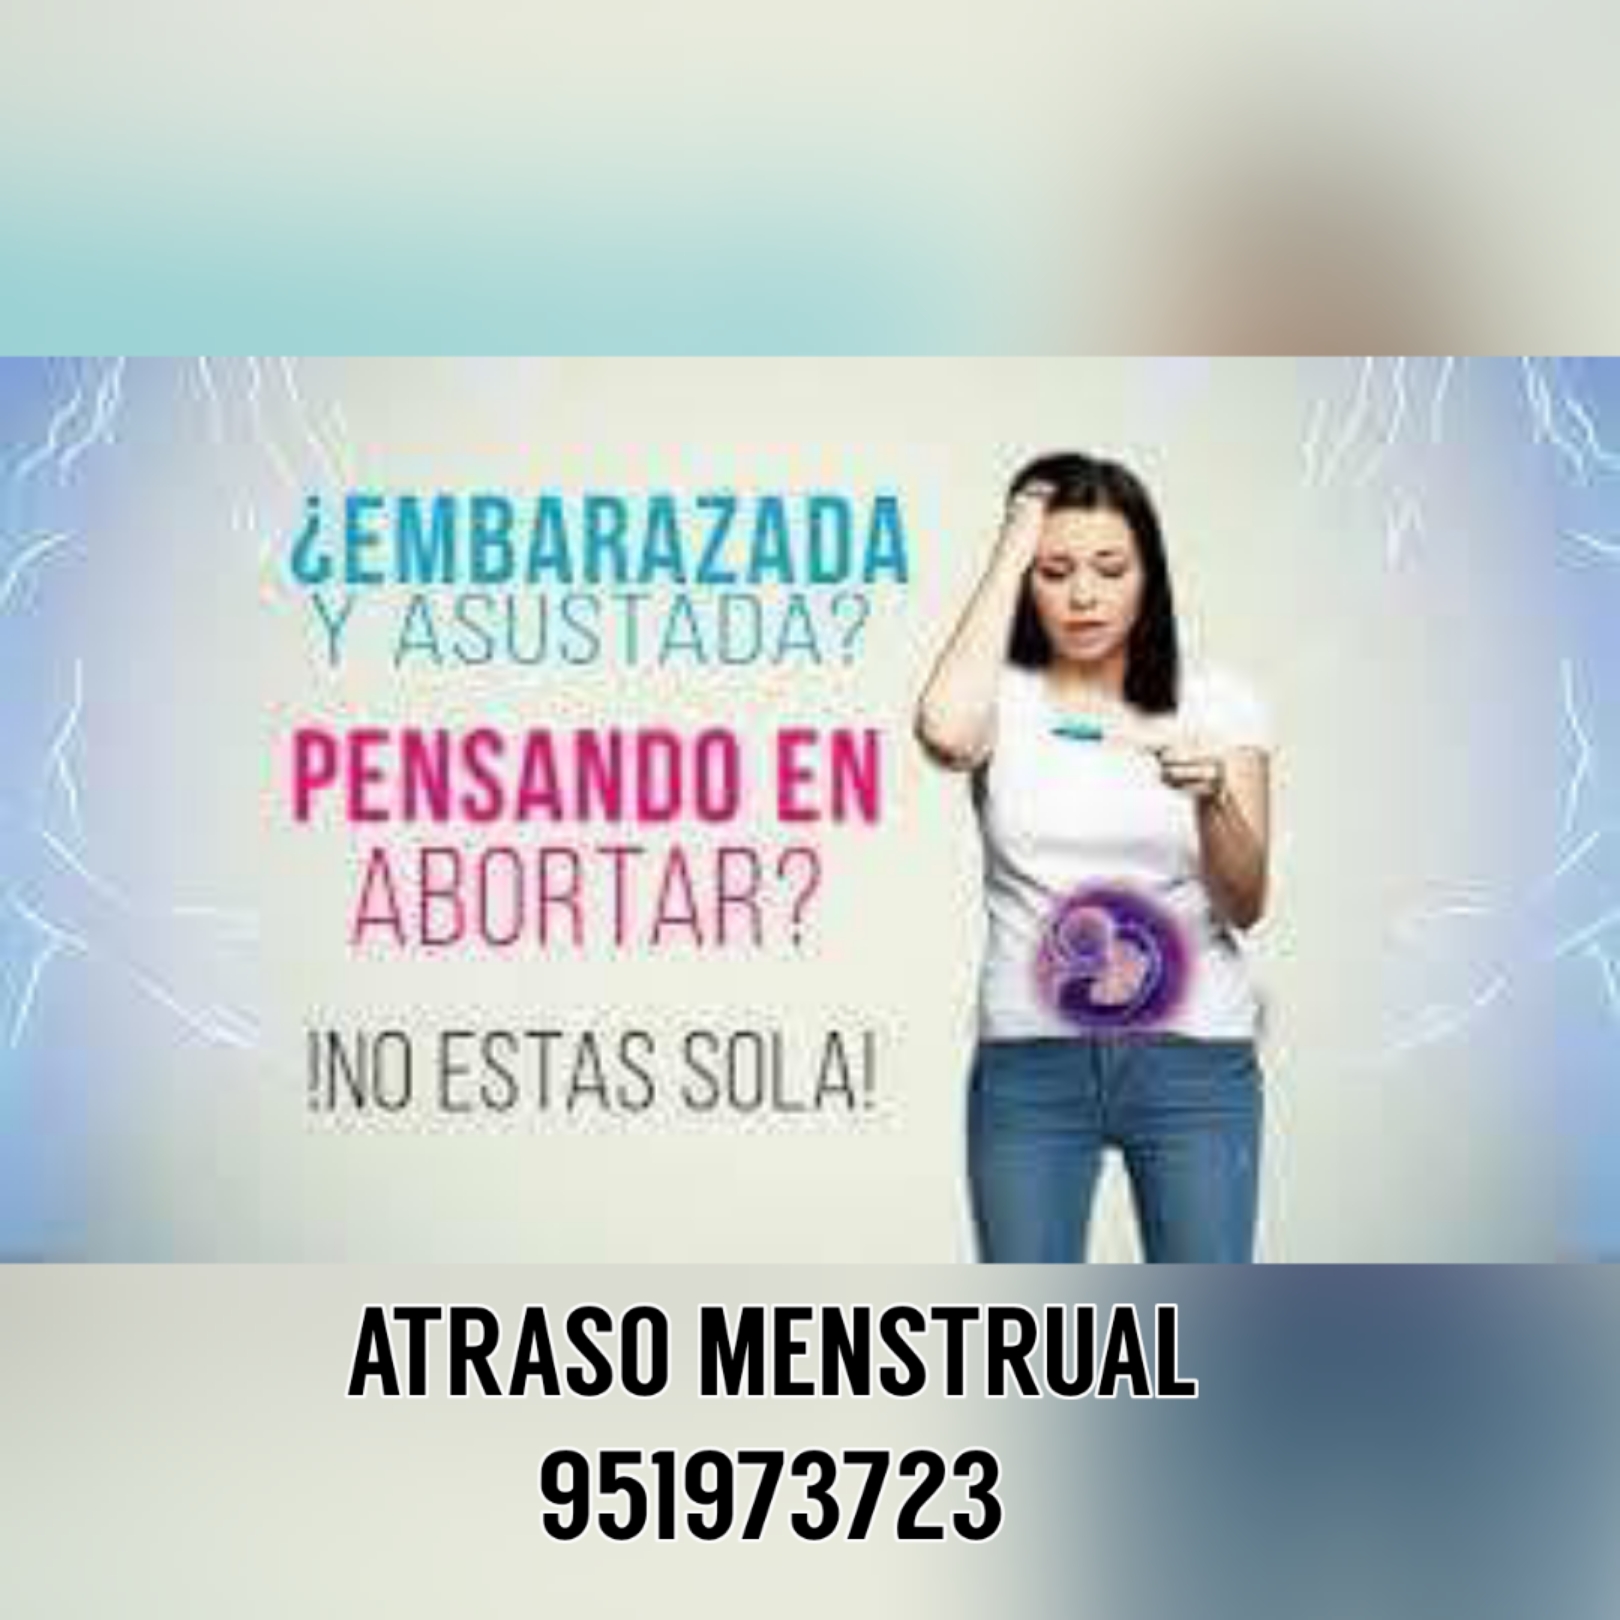 Atraso Menstrual 951973723 HUACHO Limpieza Segura